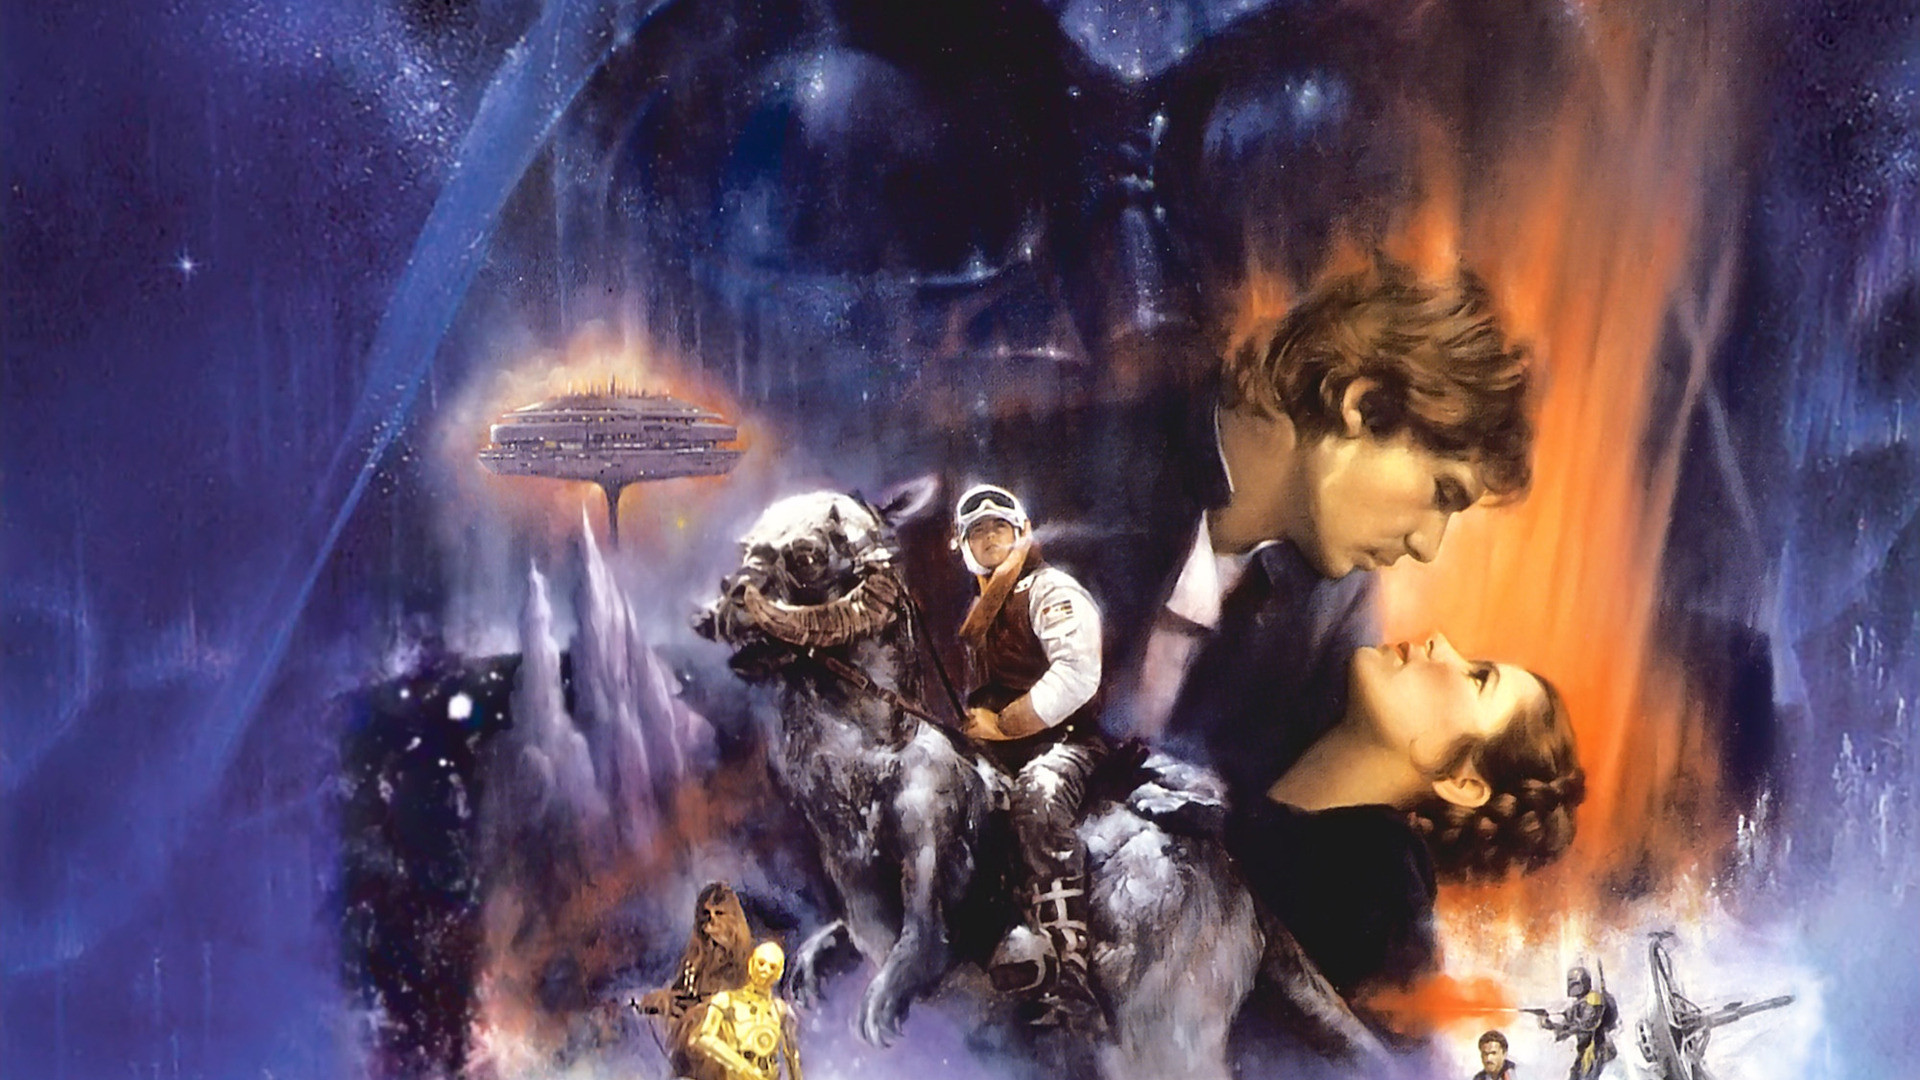 Star Wars Episode 7 Official Poster - wallpaper